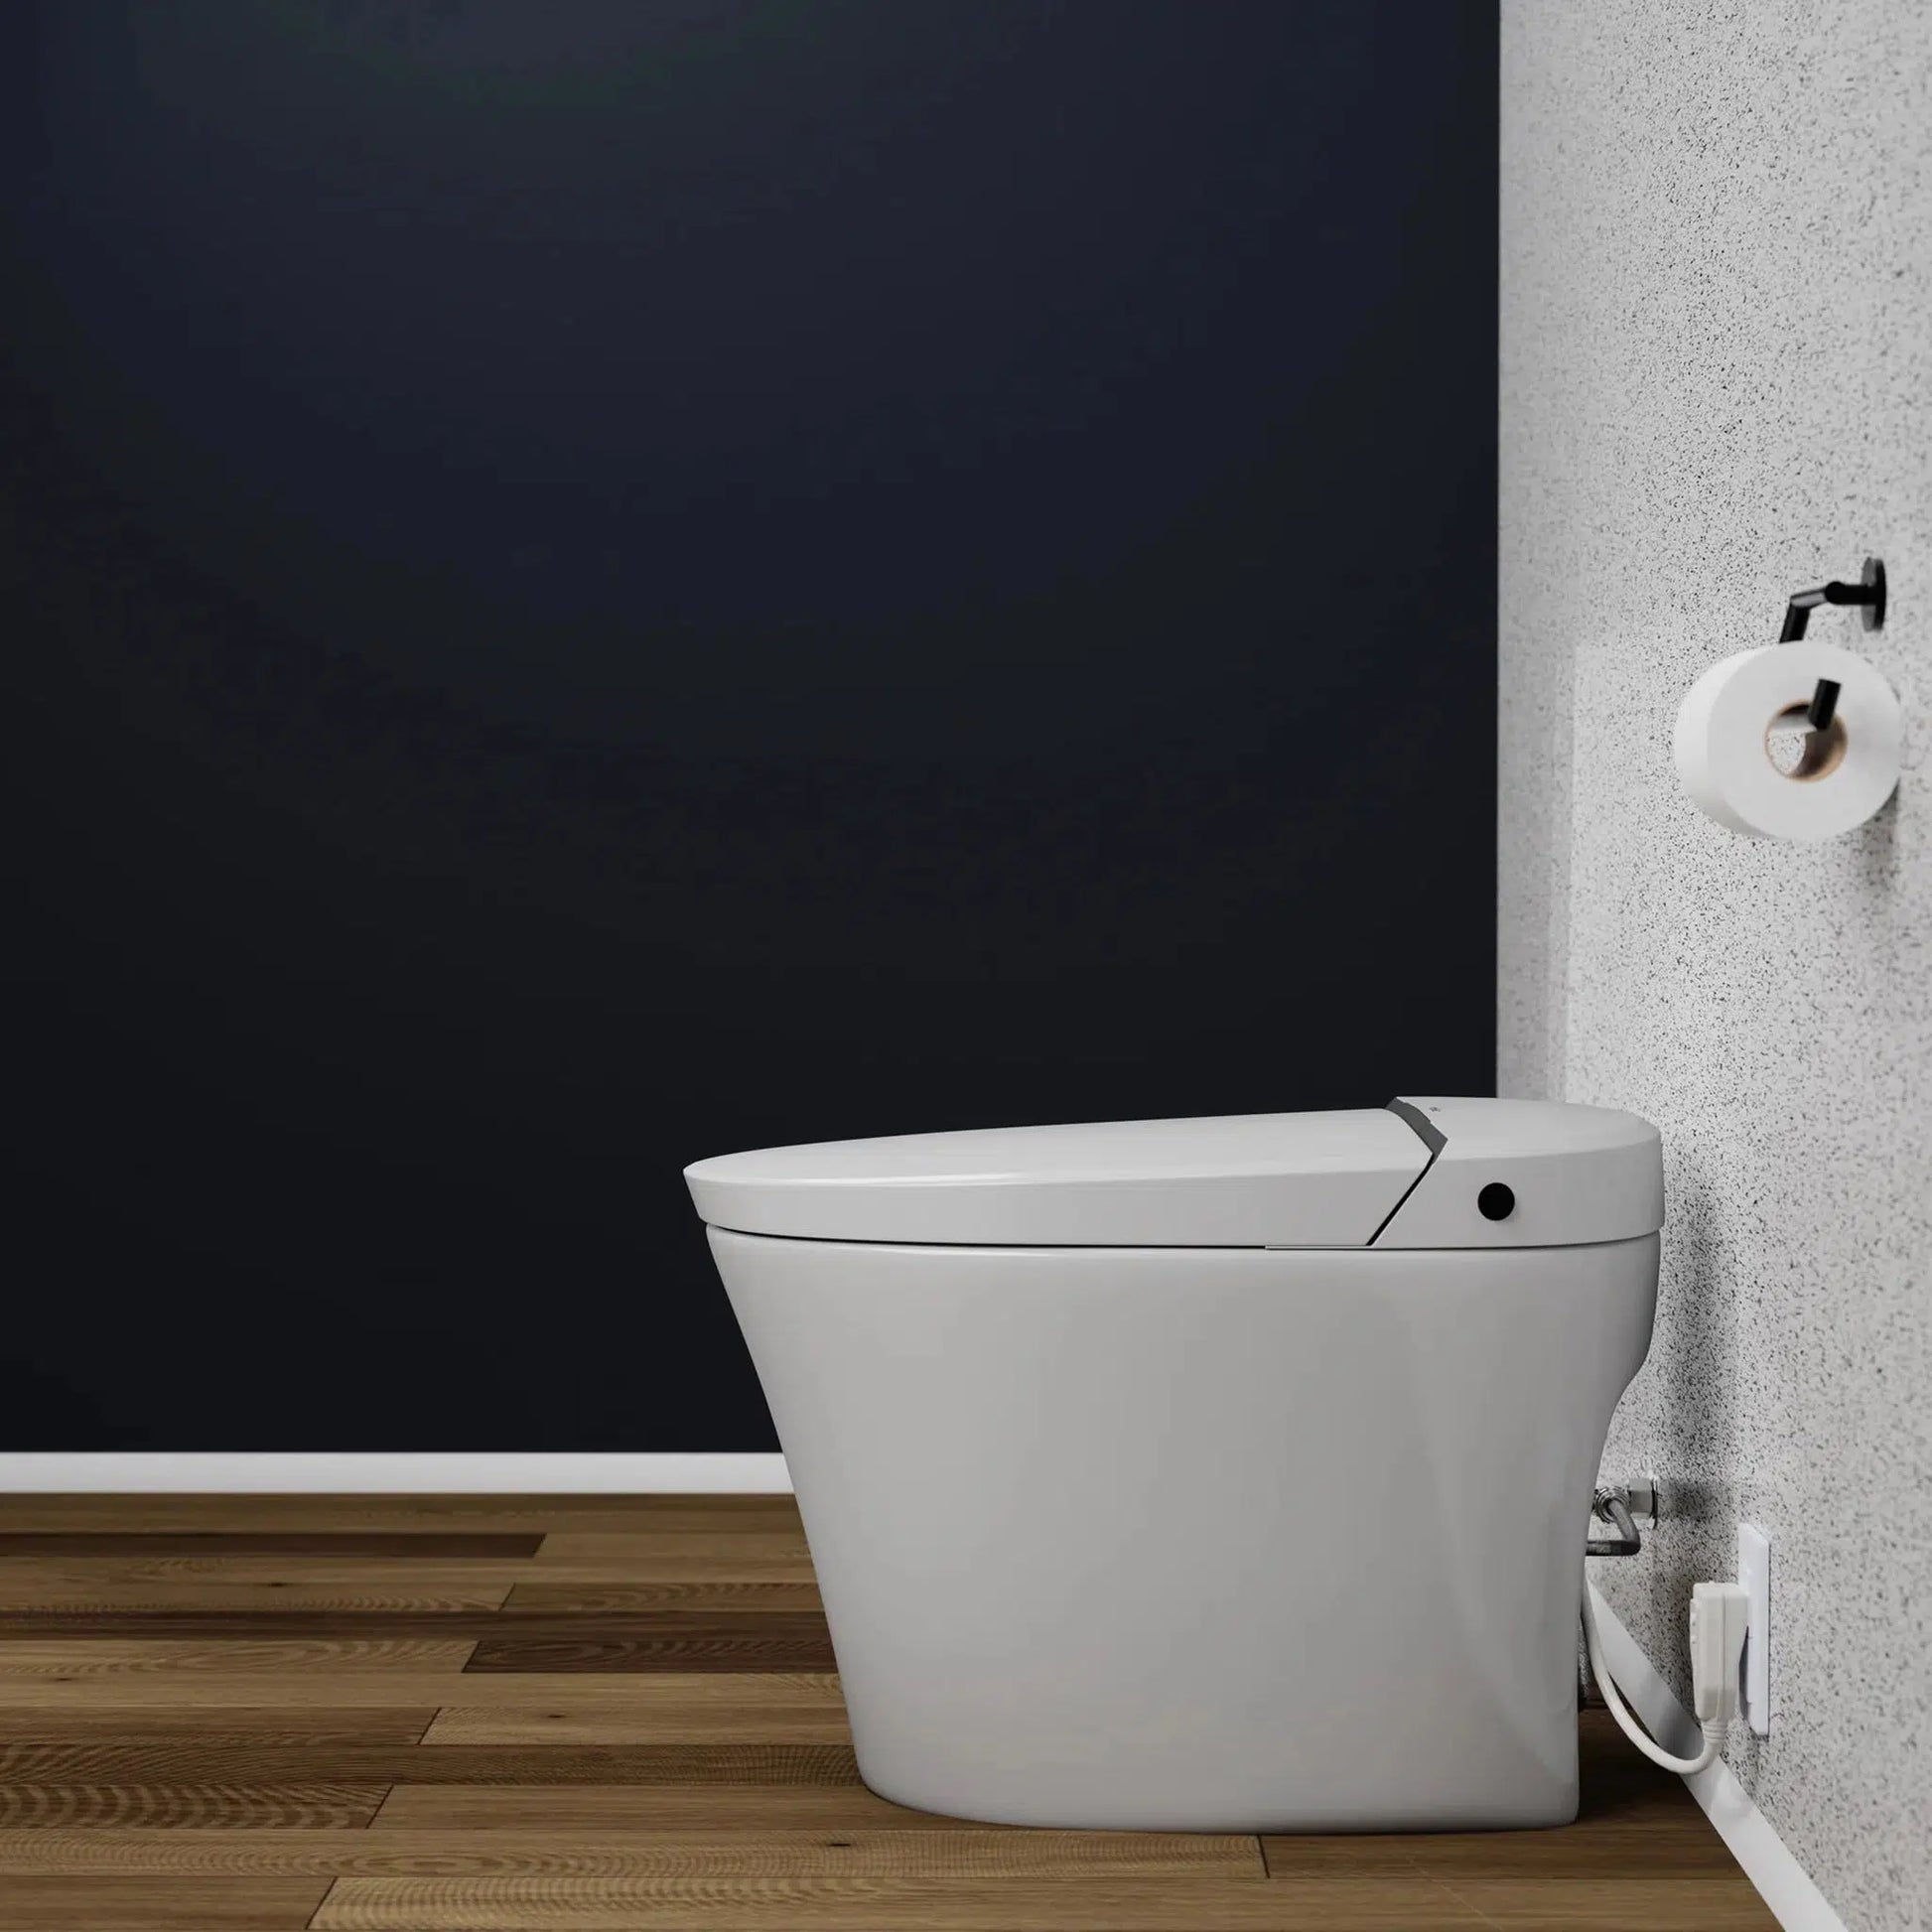 Trone Chiaro White Elongated Electronic Luxury Toilet With Integrated Bidet